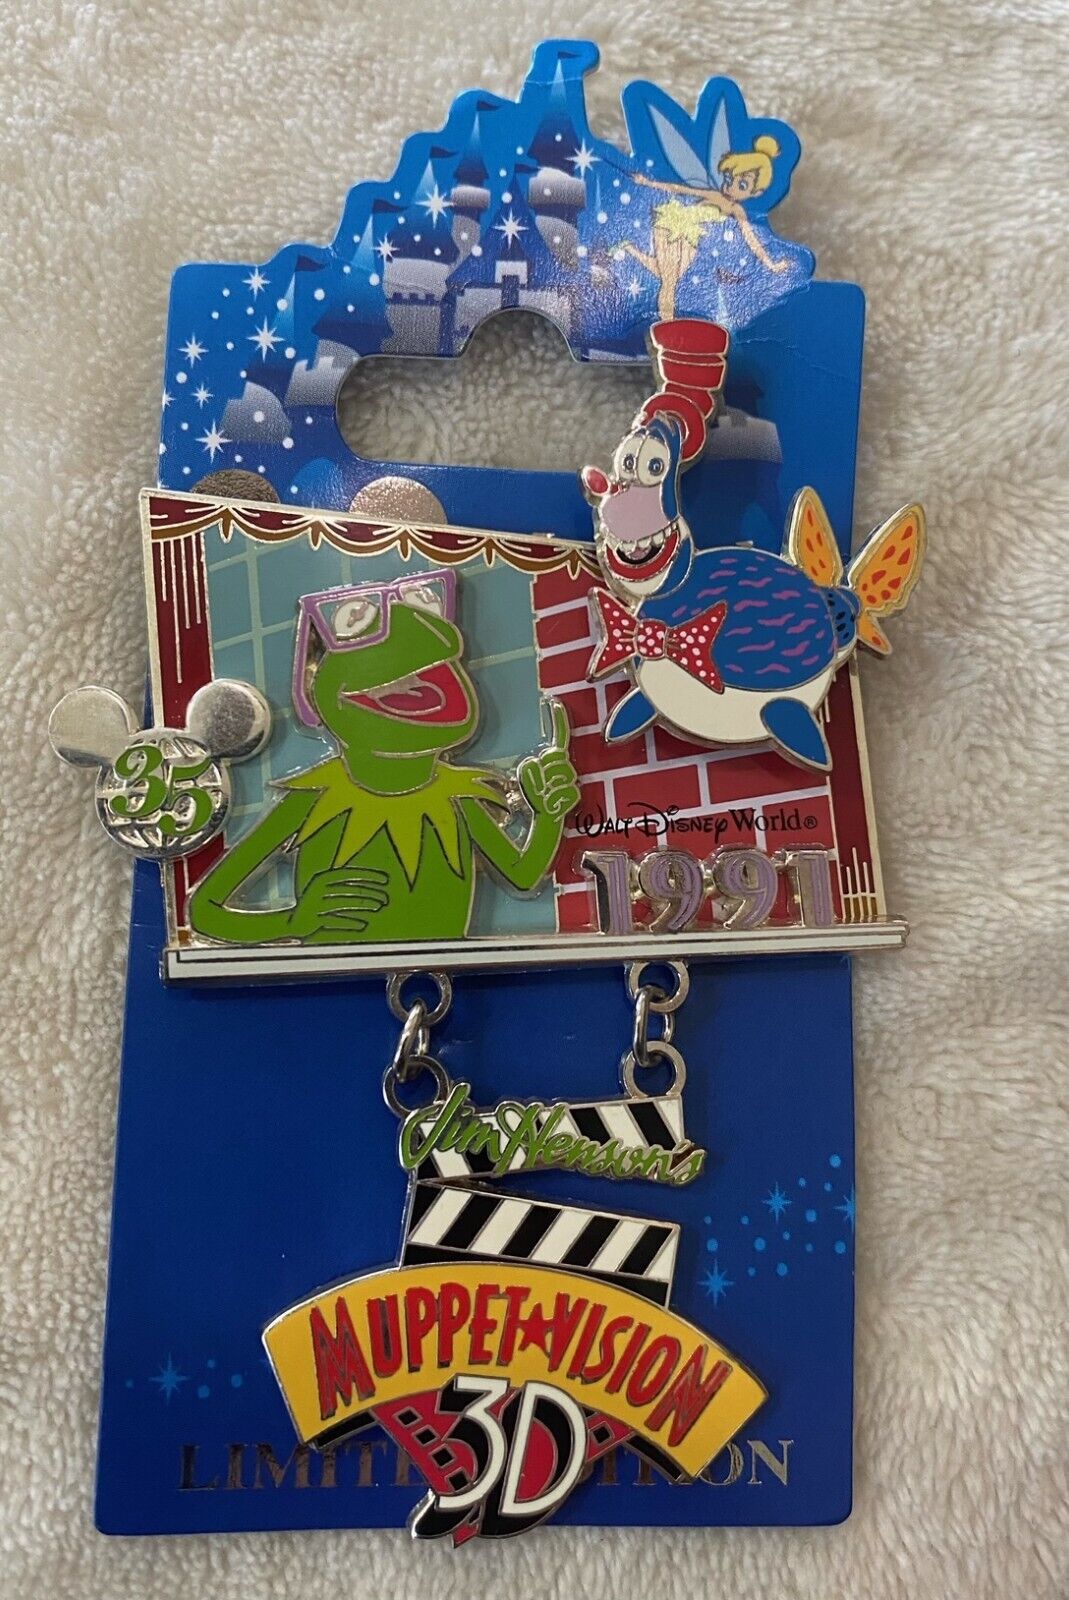 WDW Kermit, Waldo 35 Magical Milestones 1991 Muppet*Vision 3D Opens Pin LE 2500